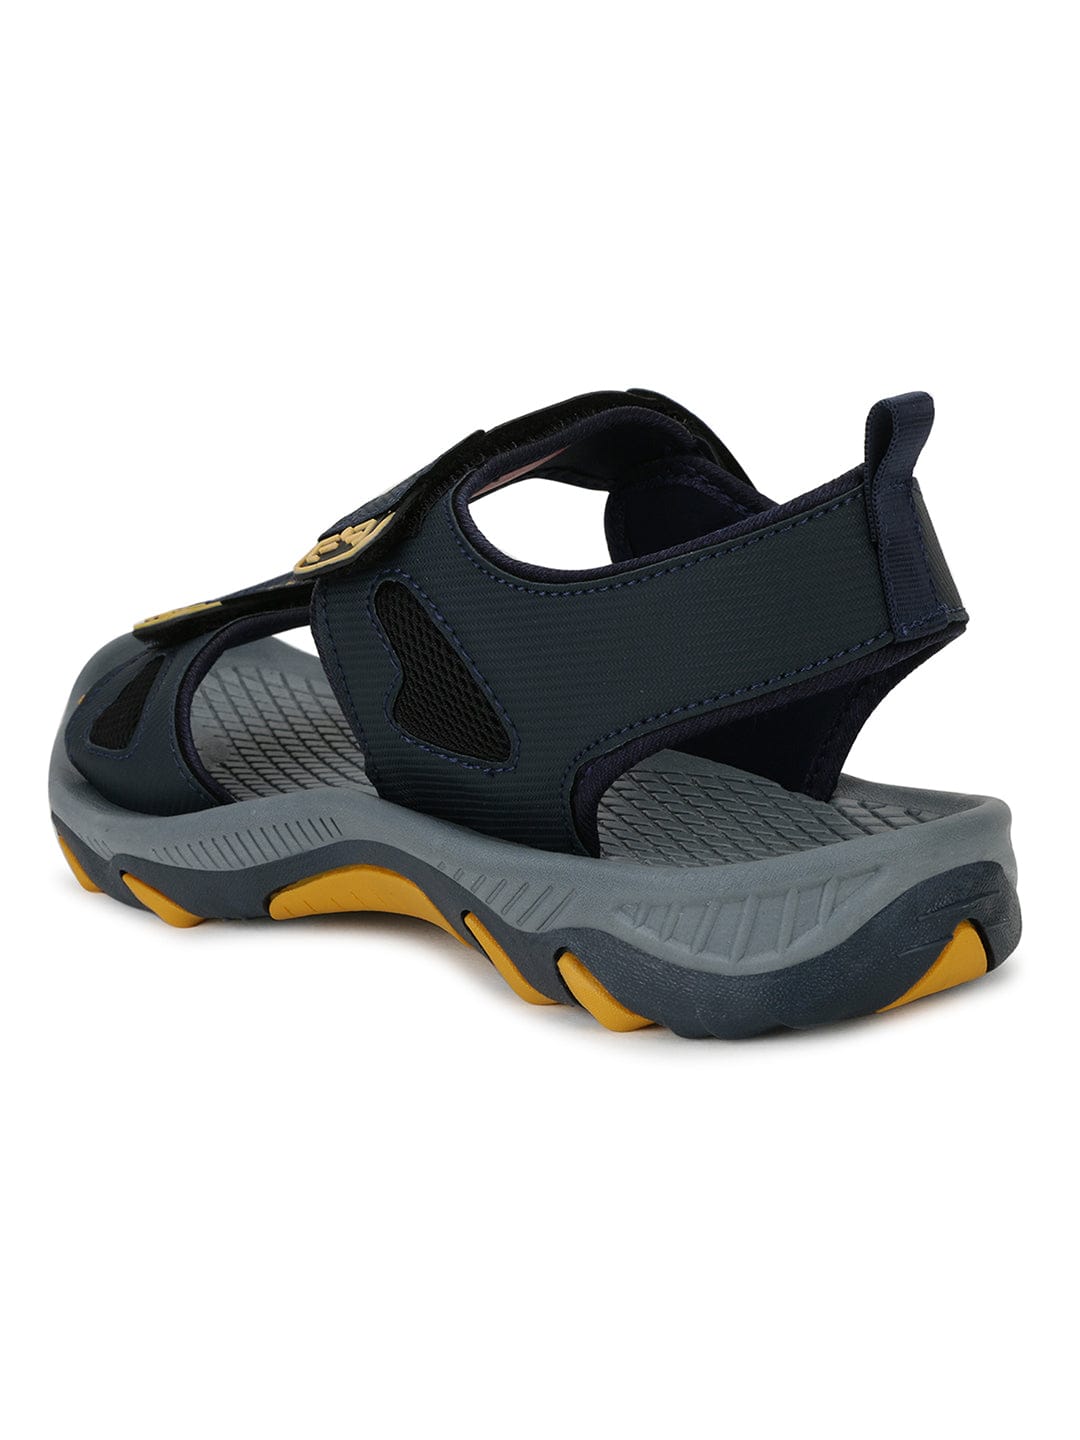 Buy 2GC-01 Men's Outdoor Sandal online | Campus Shoes